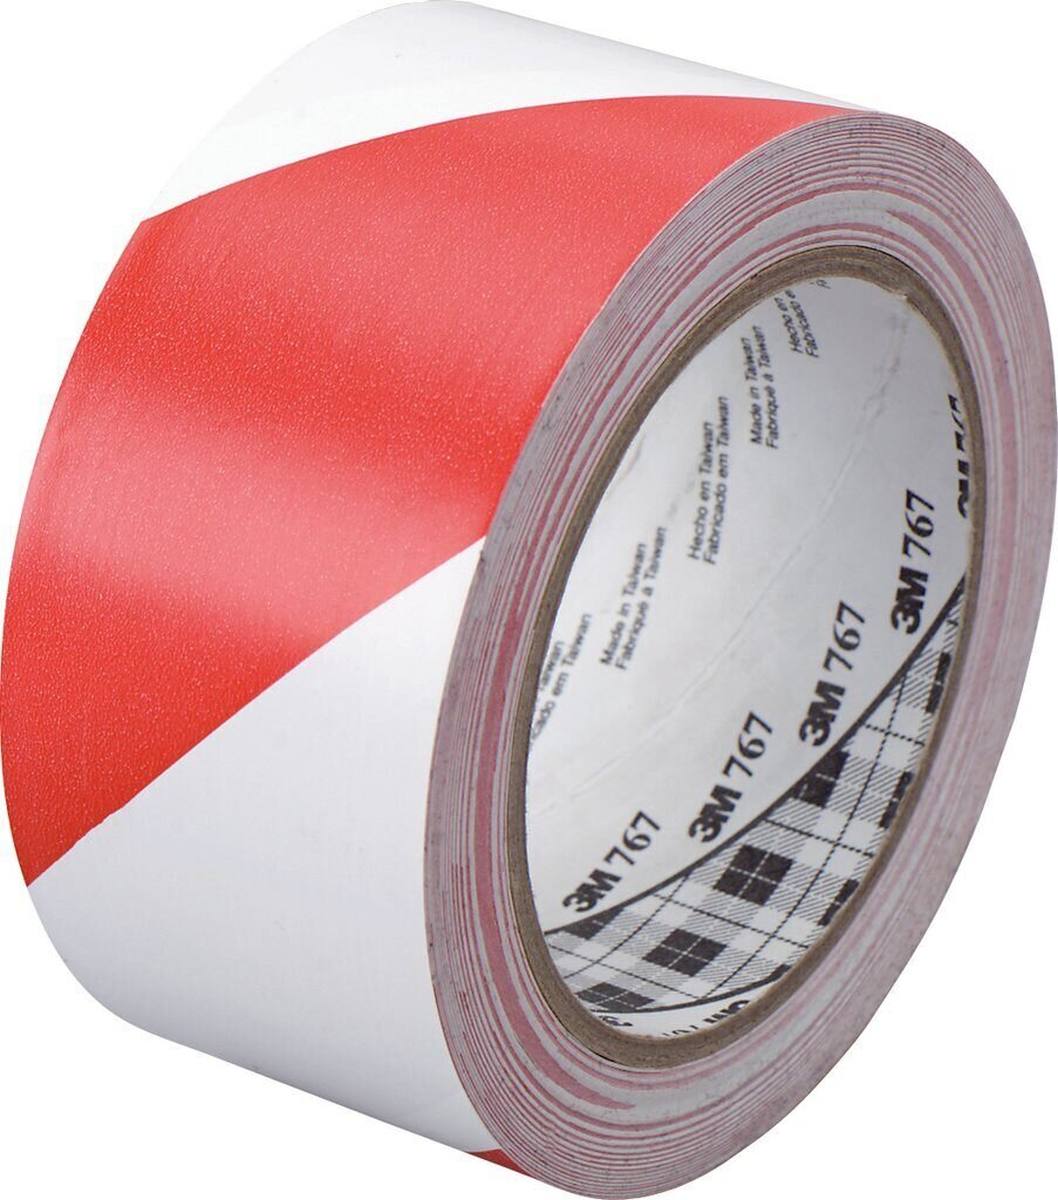 3M Scotch All Purpose Soft PVC Tape 767i 50mmx33m red/white